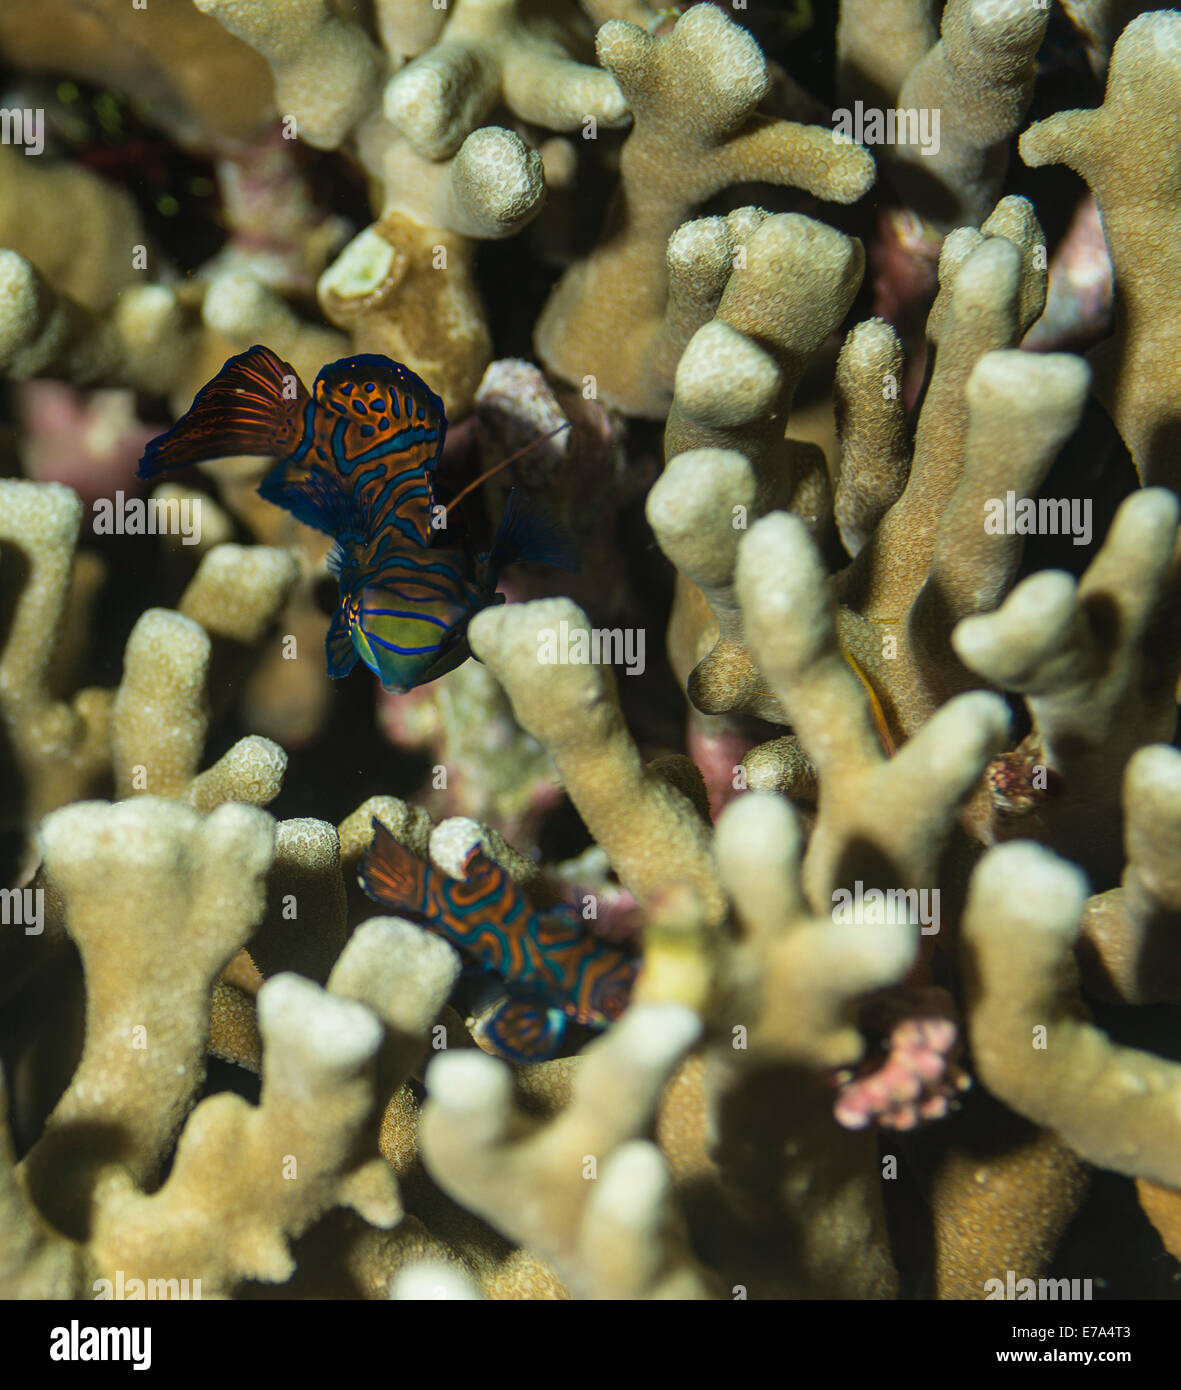 Mandarinfish hiding among the corals Stock Photo